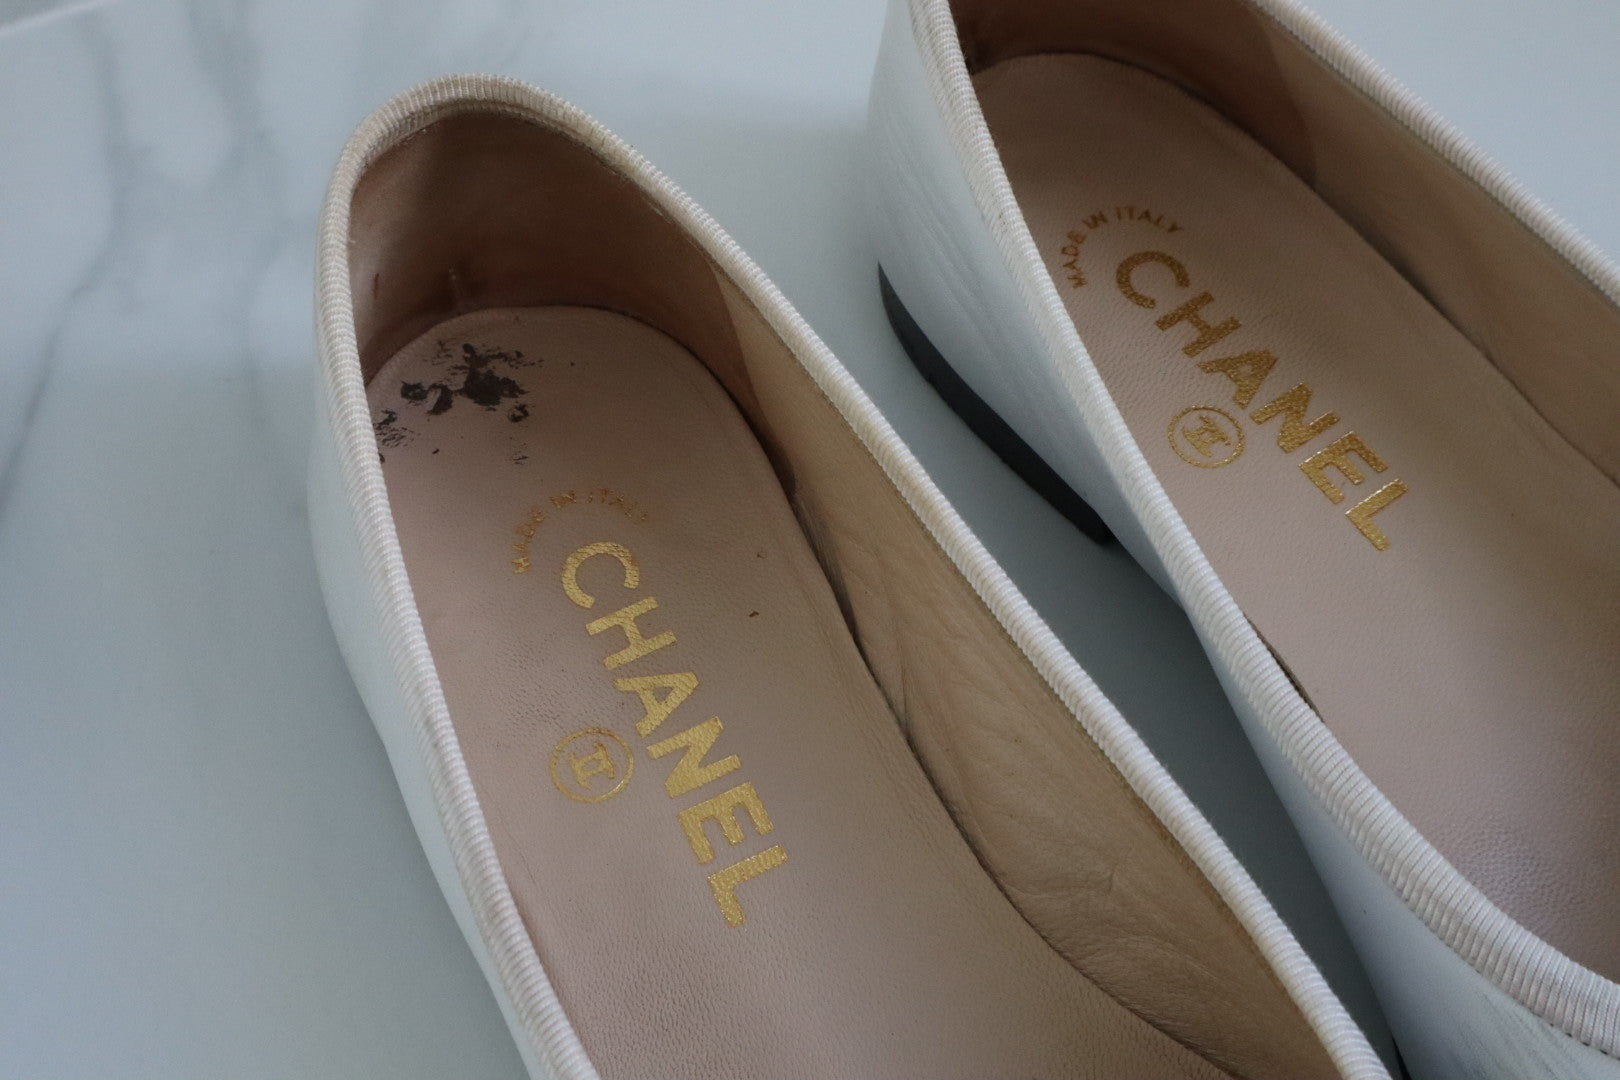 Vintage Chanel Shoes!